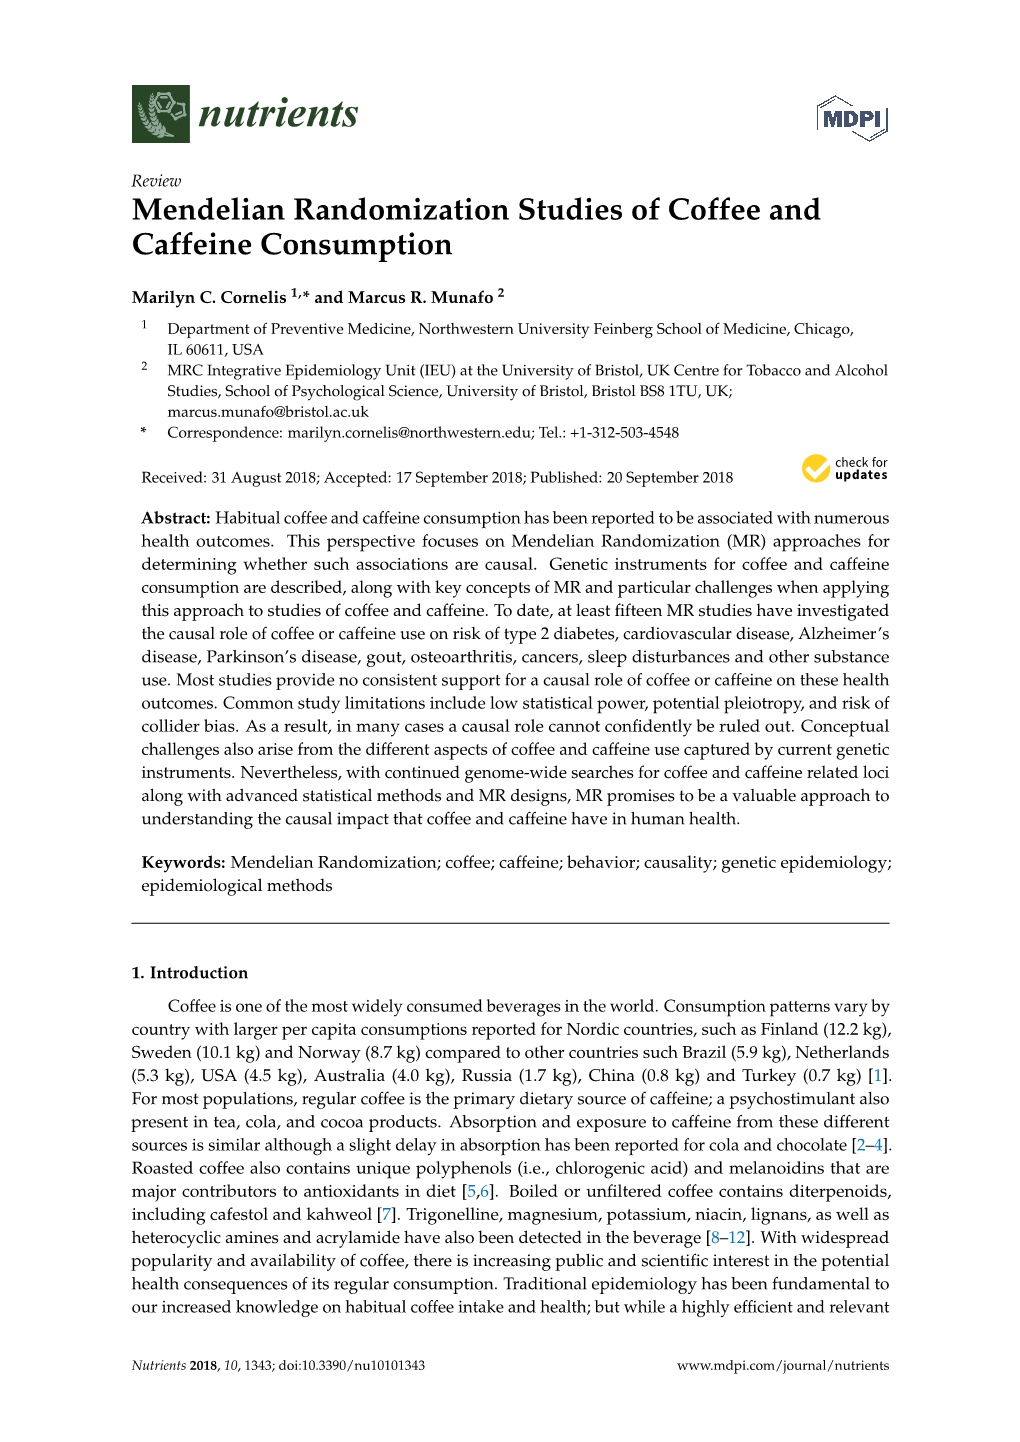 Mendelian Randomization Studies of Coffee and Caffeine Consumption